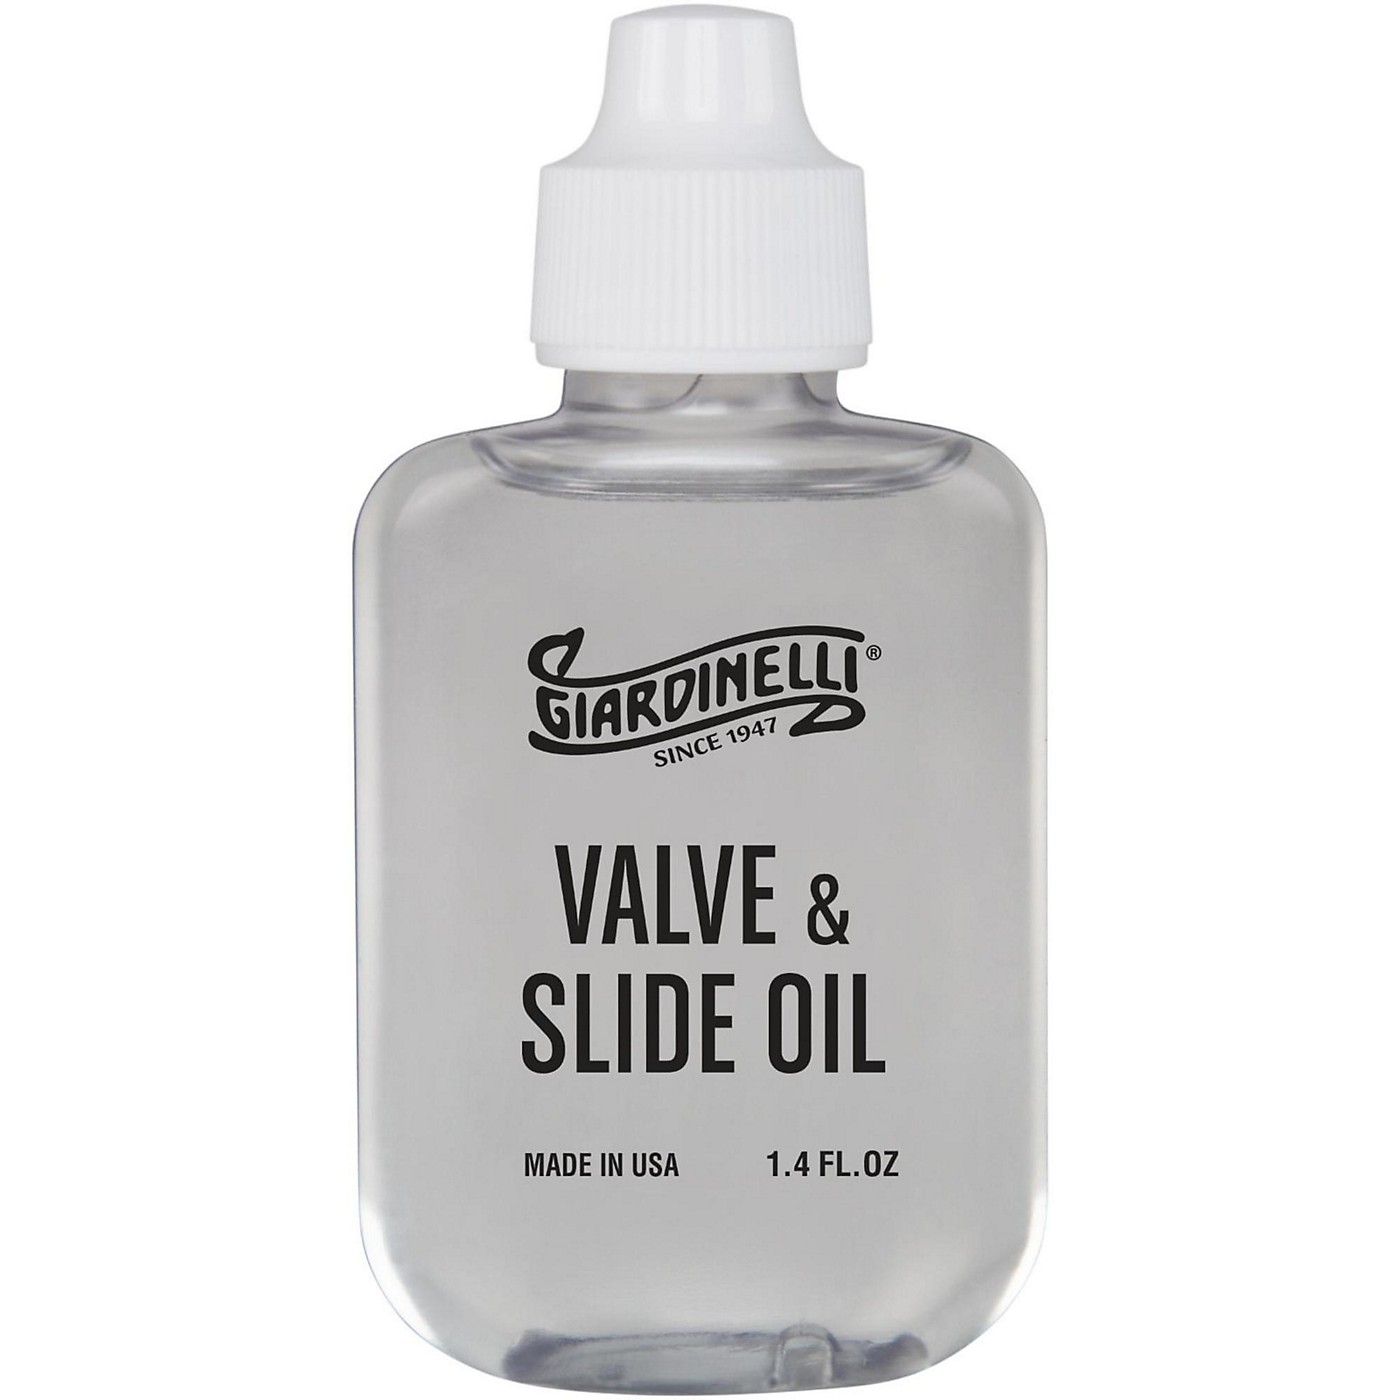 Giardinelli Valve and Slide Oil thumbnail